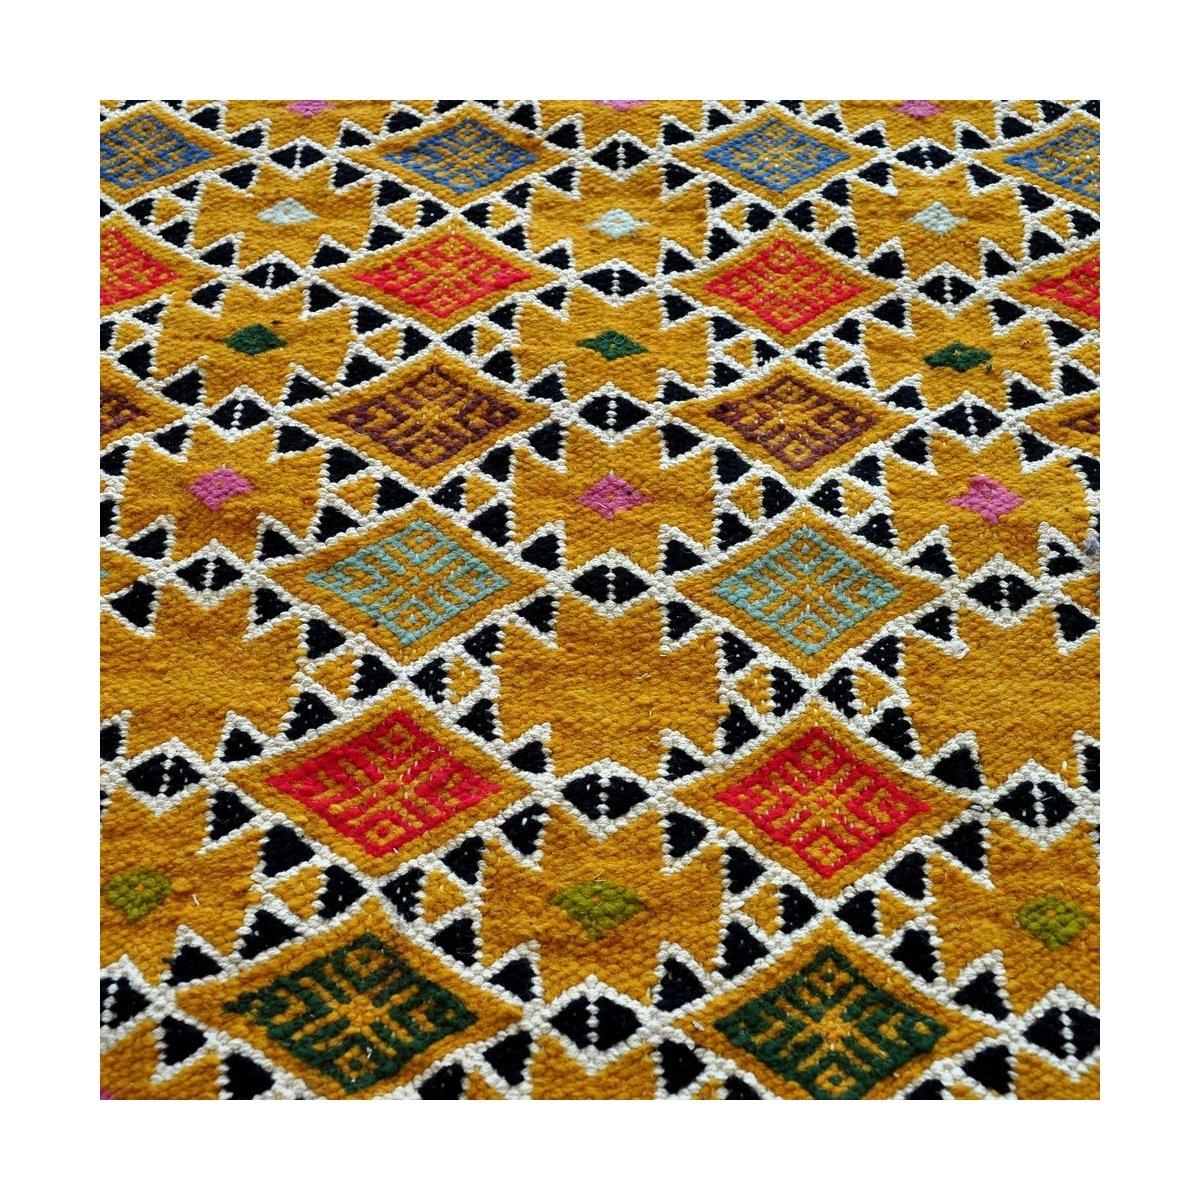 Berber tapijt Tapijt Kilim Sahara 100x200 Geel/Wit (Handgeweven, Wol, Tunesië) Tunesisch kilimdeken, Marokkaanse stijl. Rechthoe